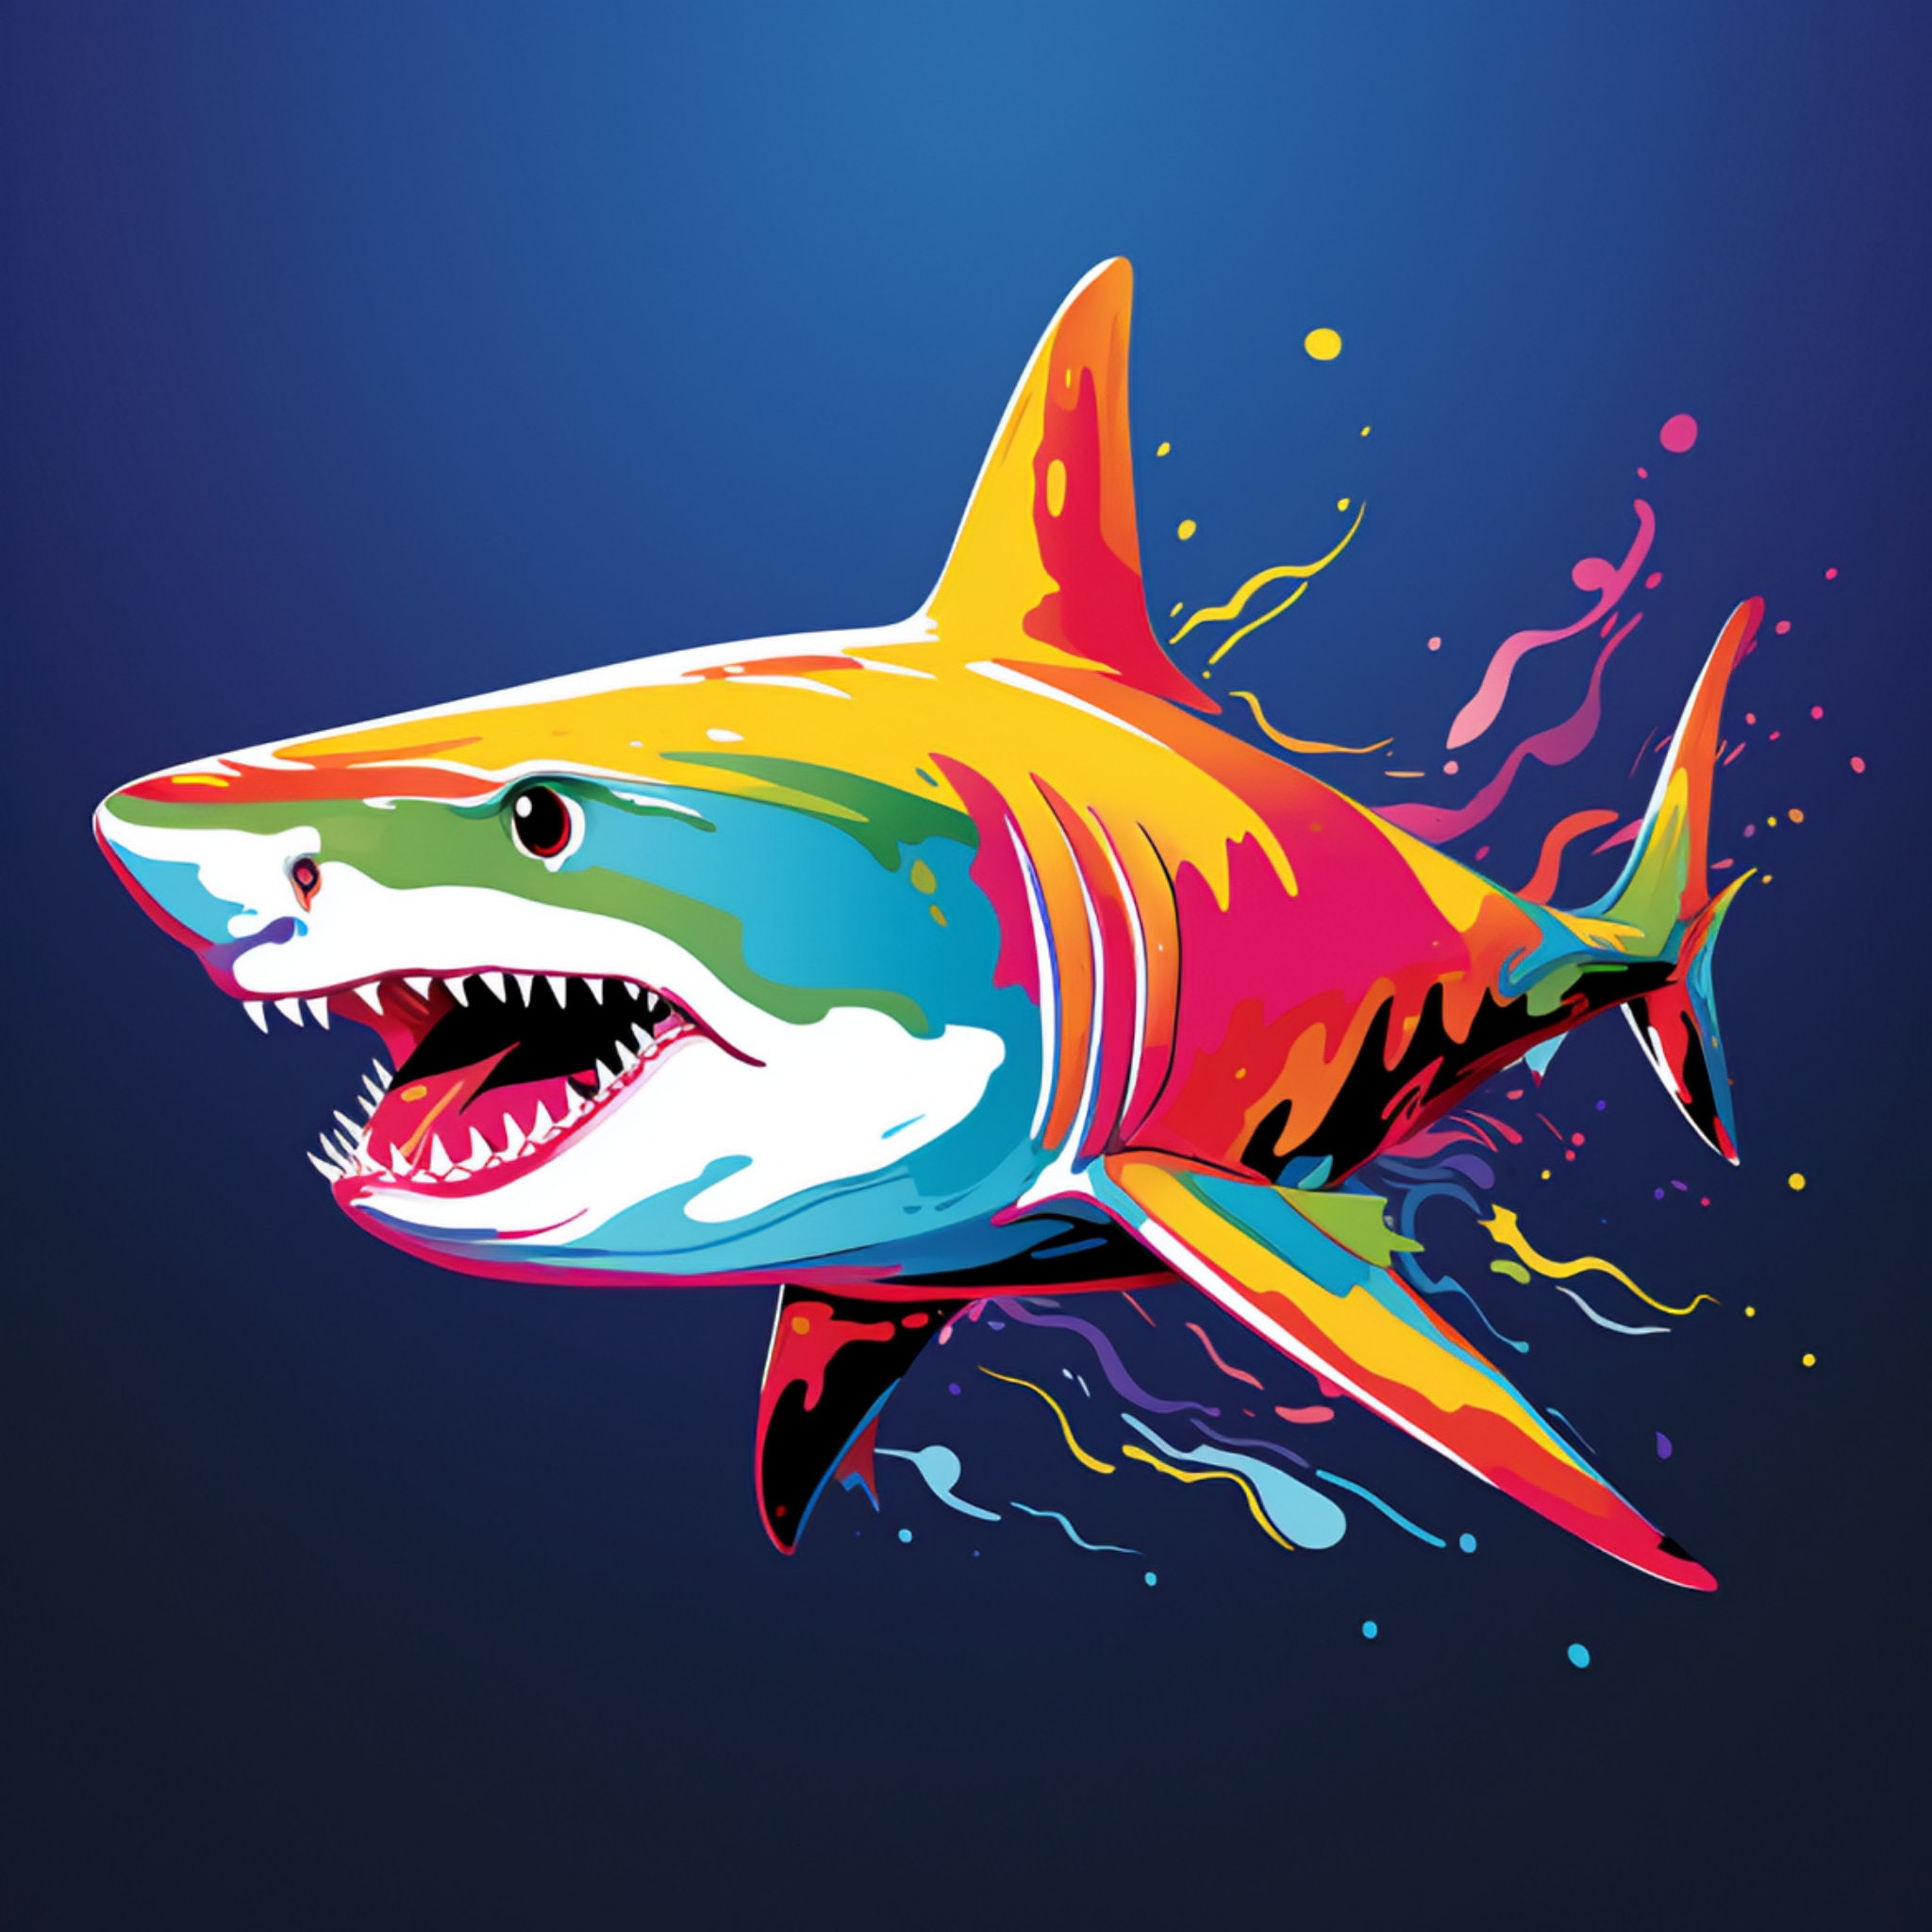 Shark Logo Mega Bundle: 800 Unique Designs and Graphics - Etsy